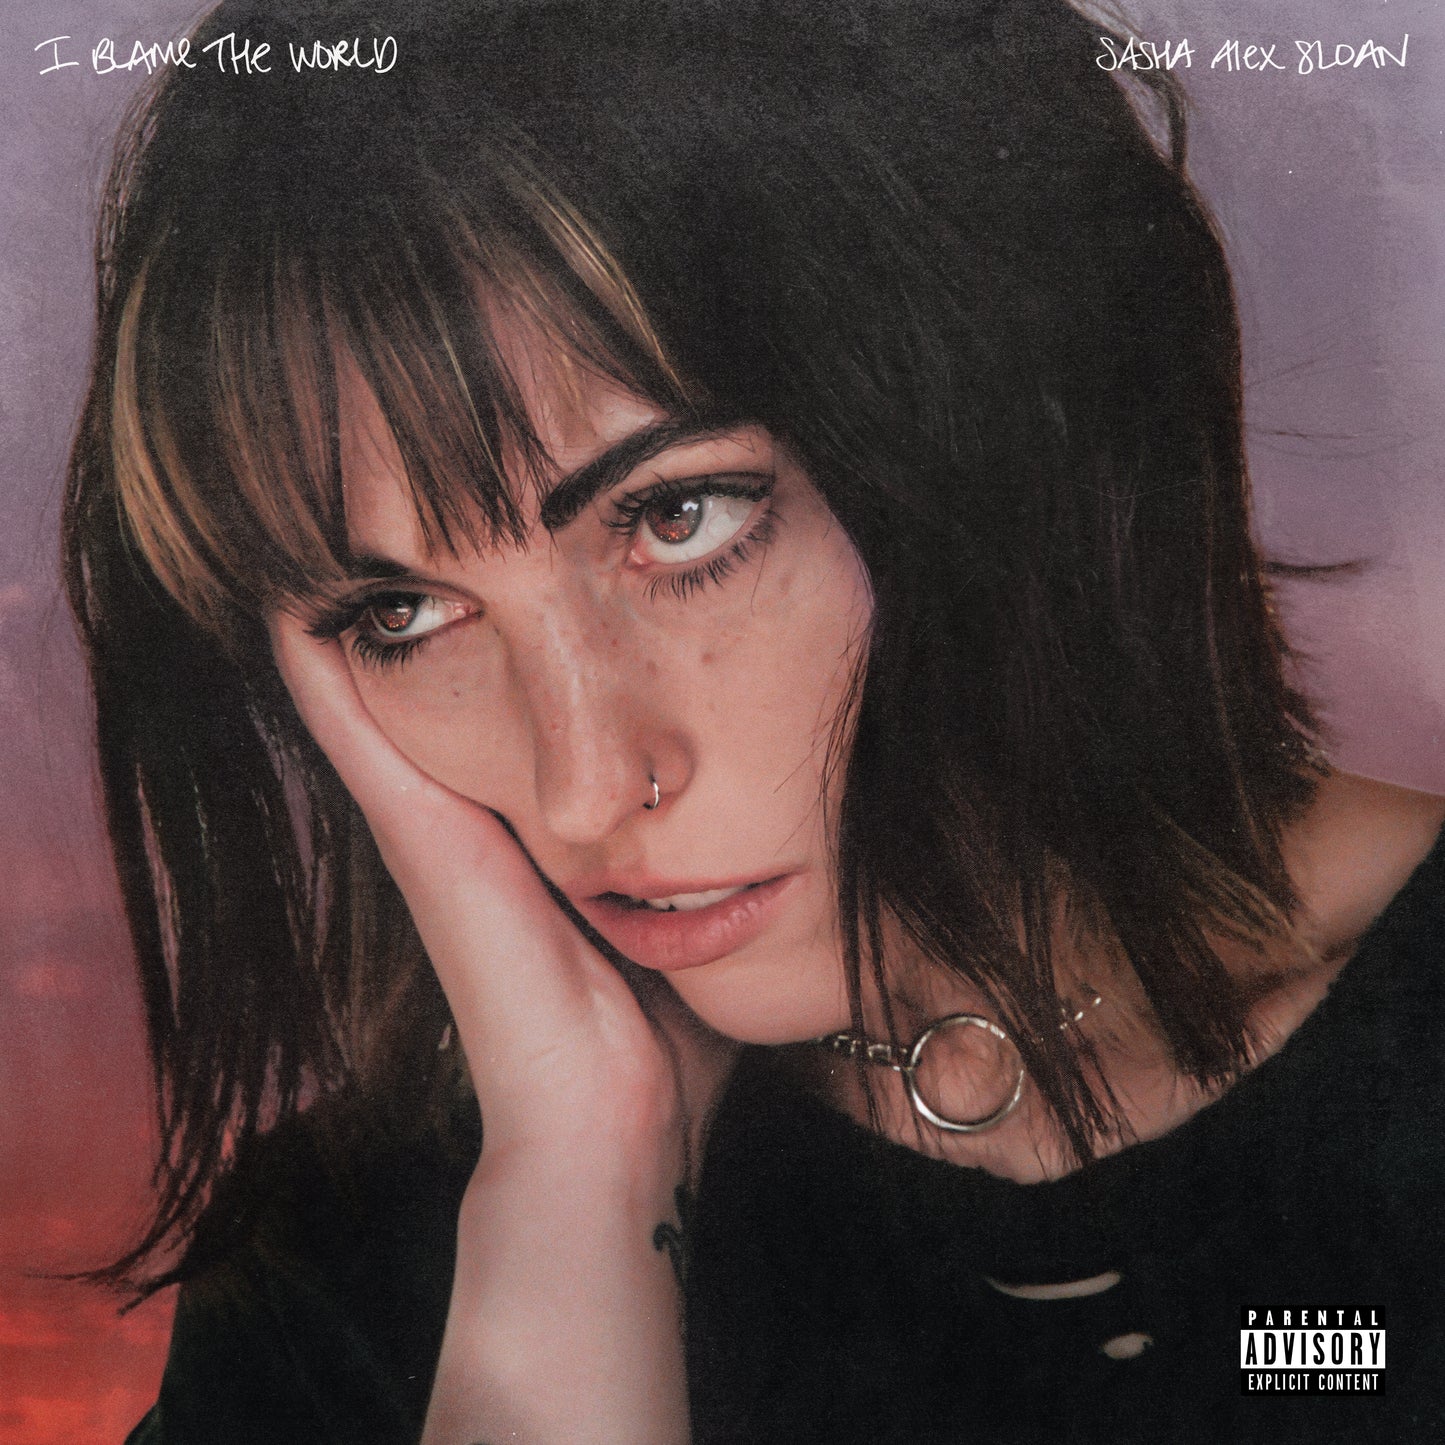 Sasha Alex Sloan - I Blame the World LP